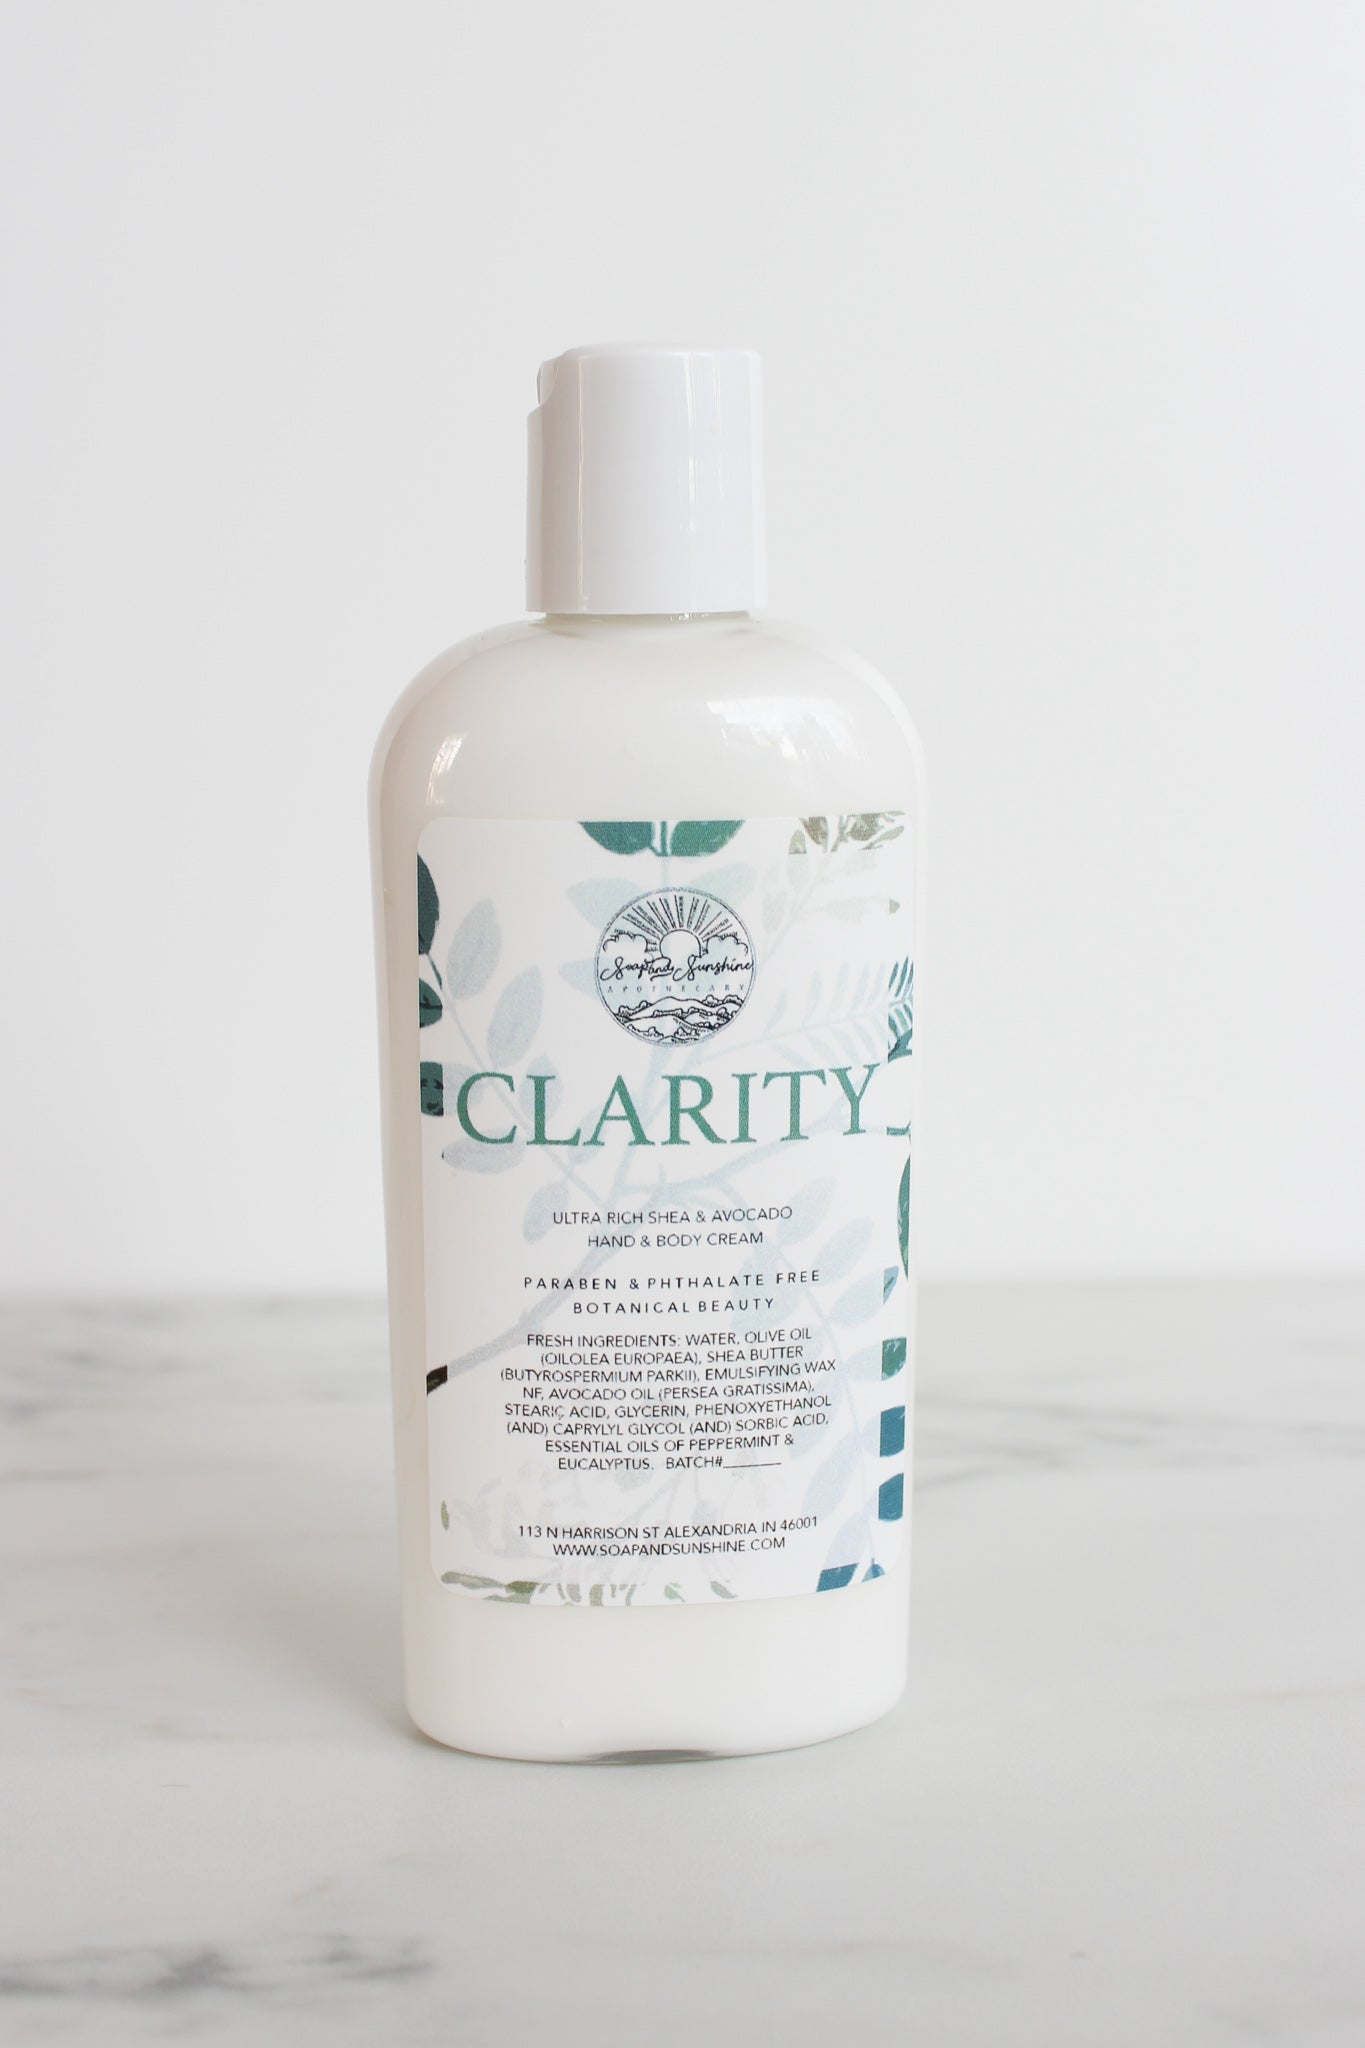 Clarity  - Shea & Avocado Body Cream